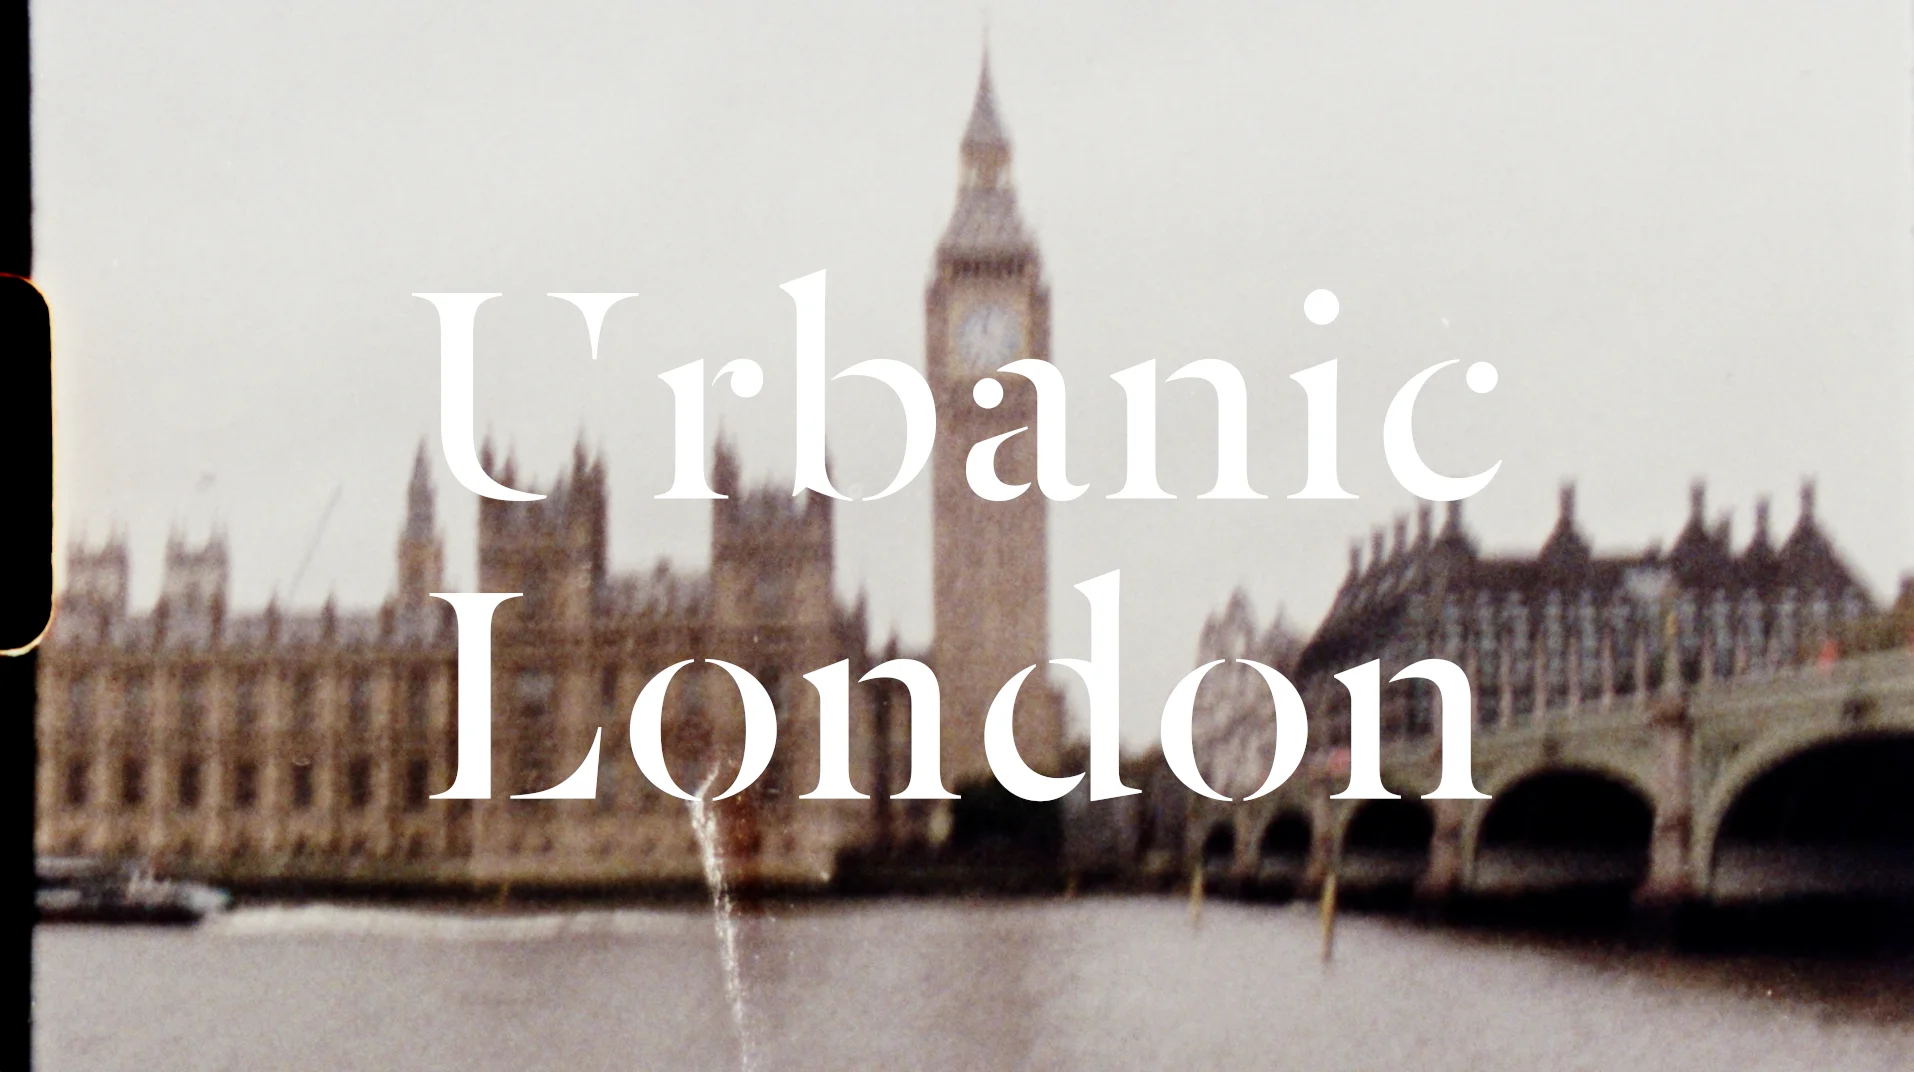 Urbanic / Ruiz Company & Mirinda Company / David Tembleque on Vimeo